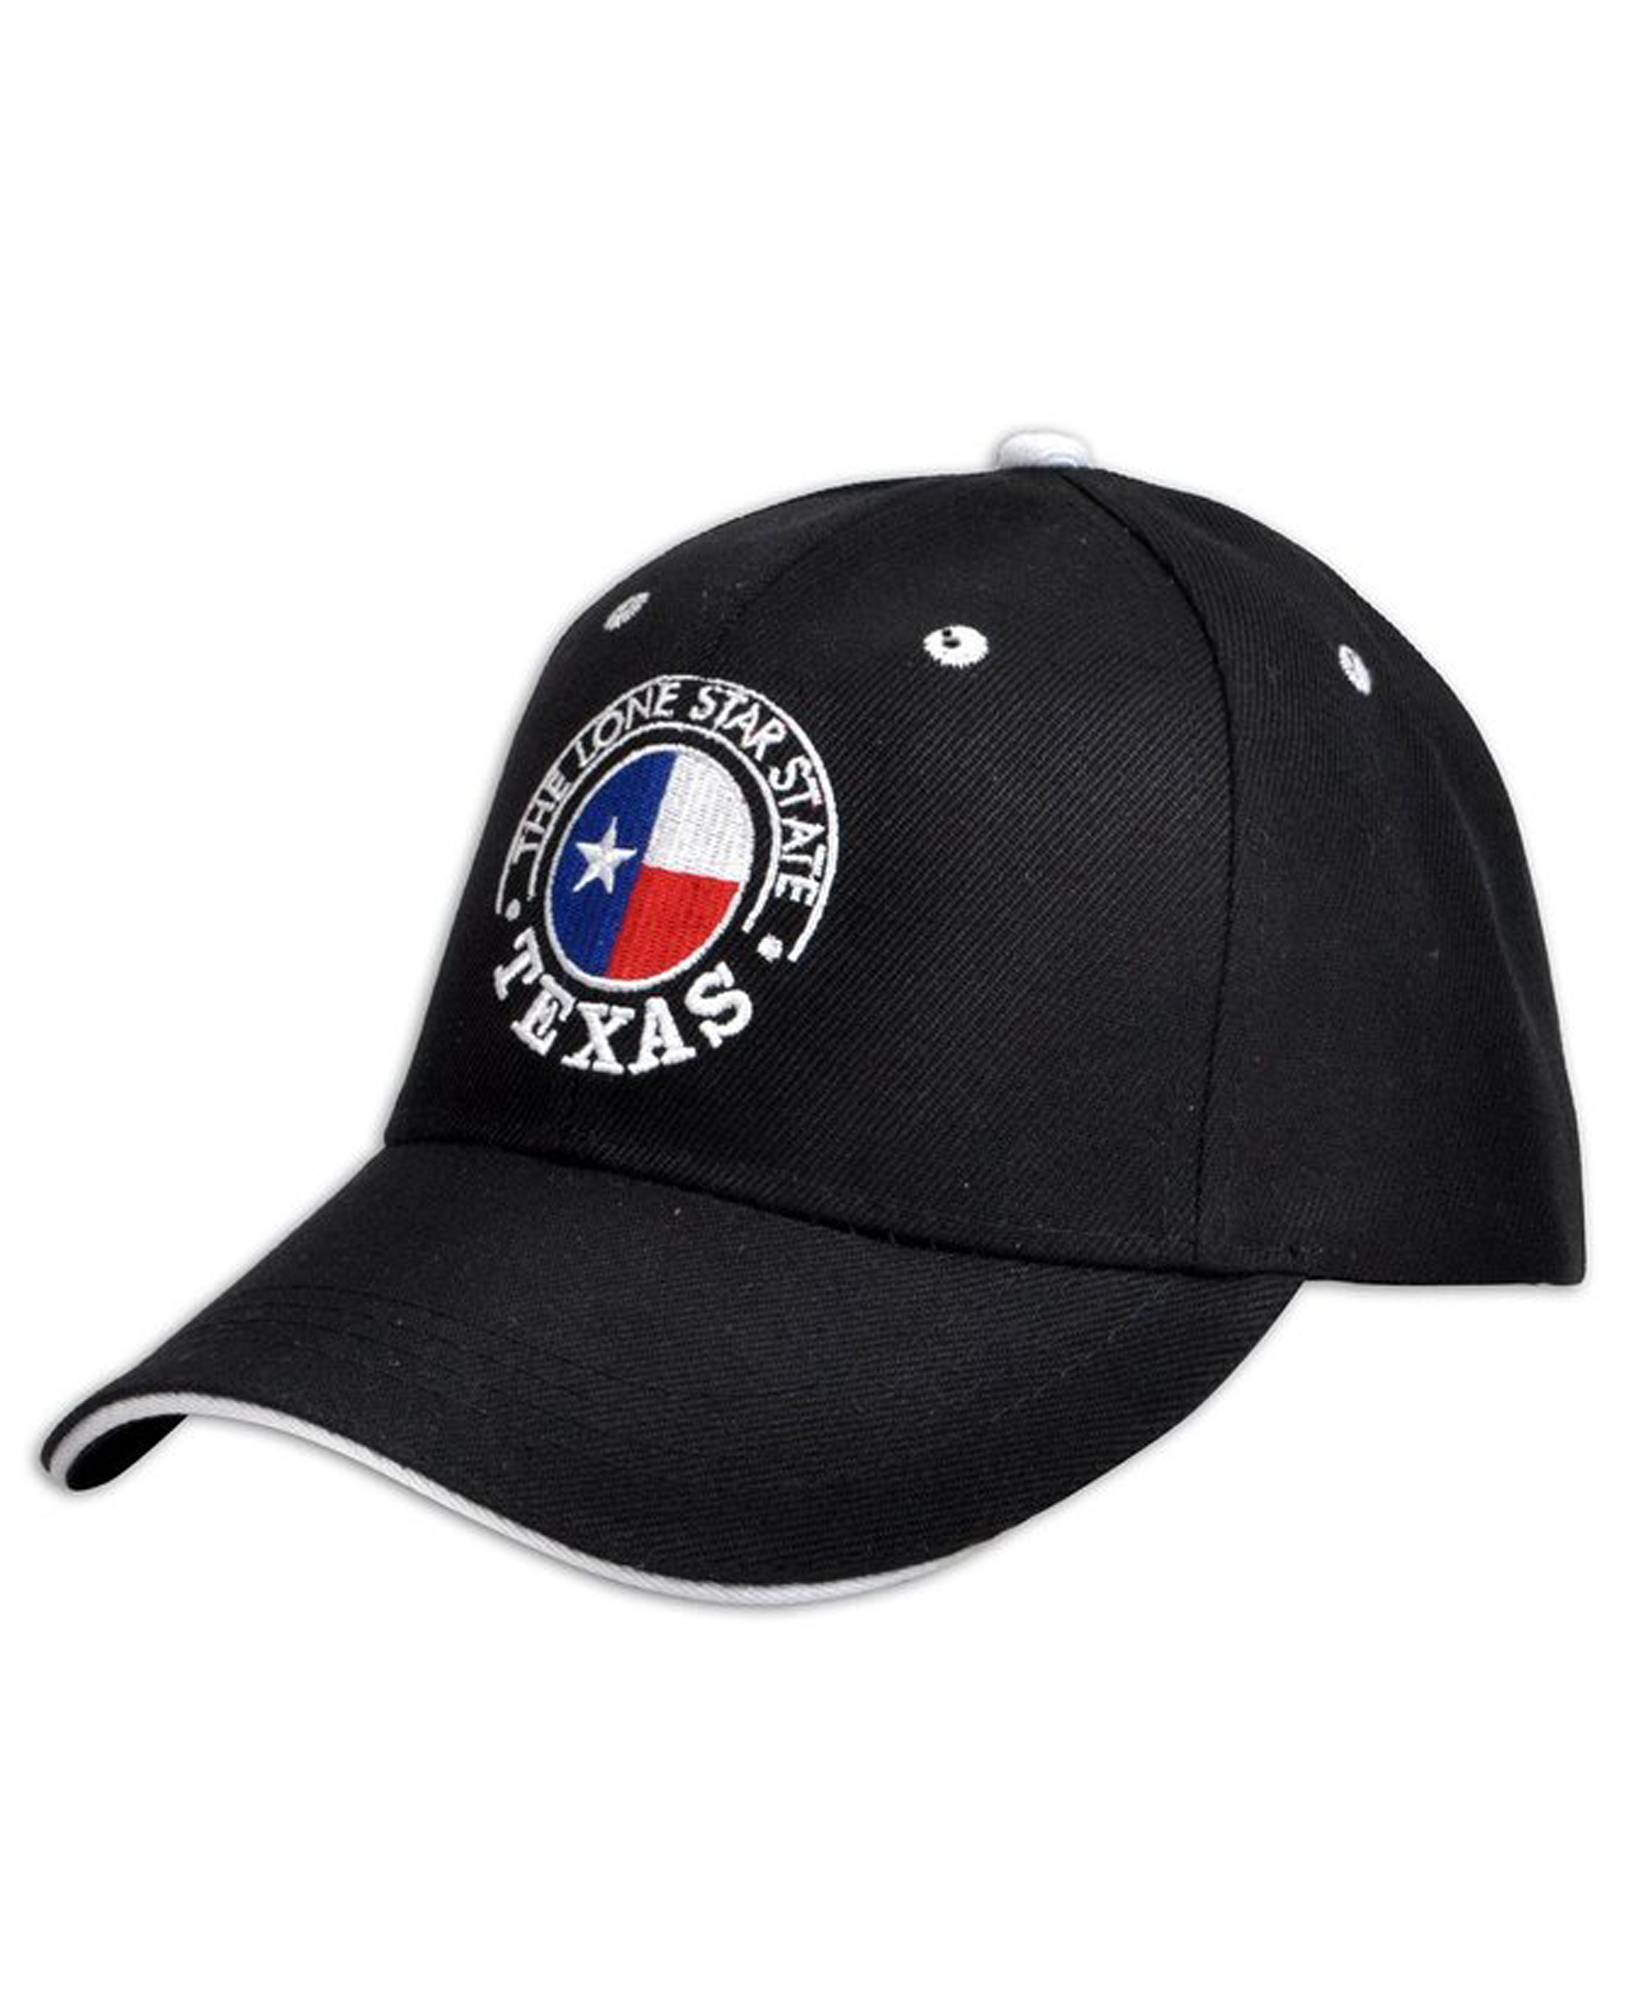 Texas State Flag Embroidered Black Baseaball Cap